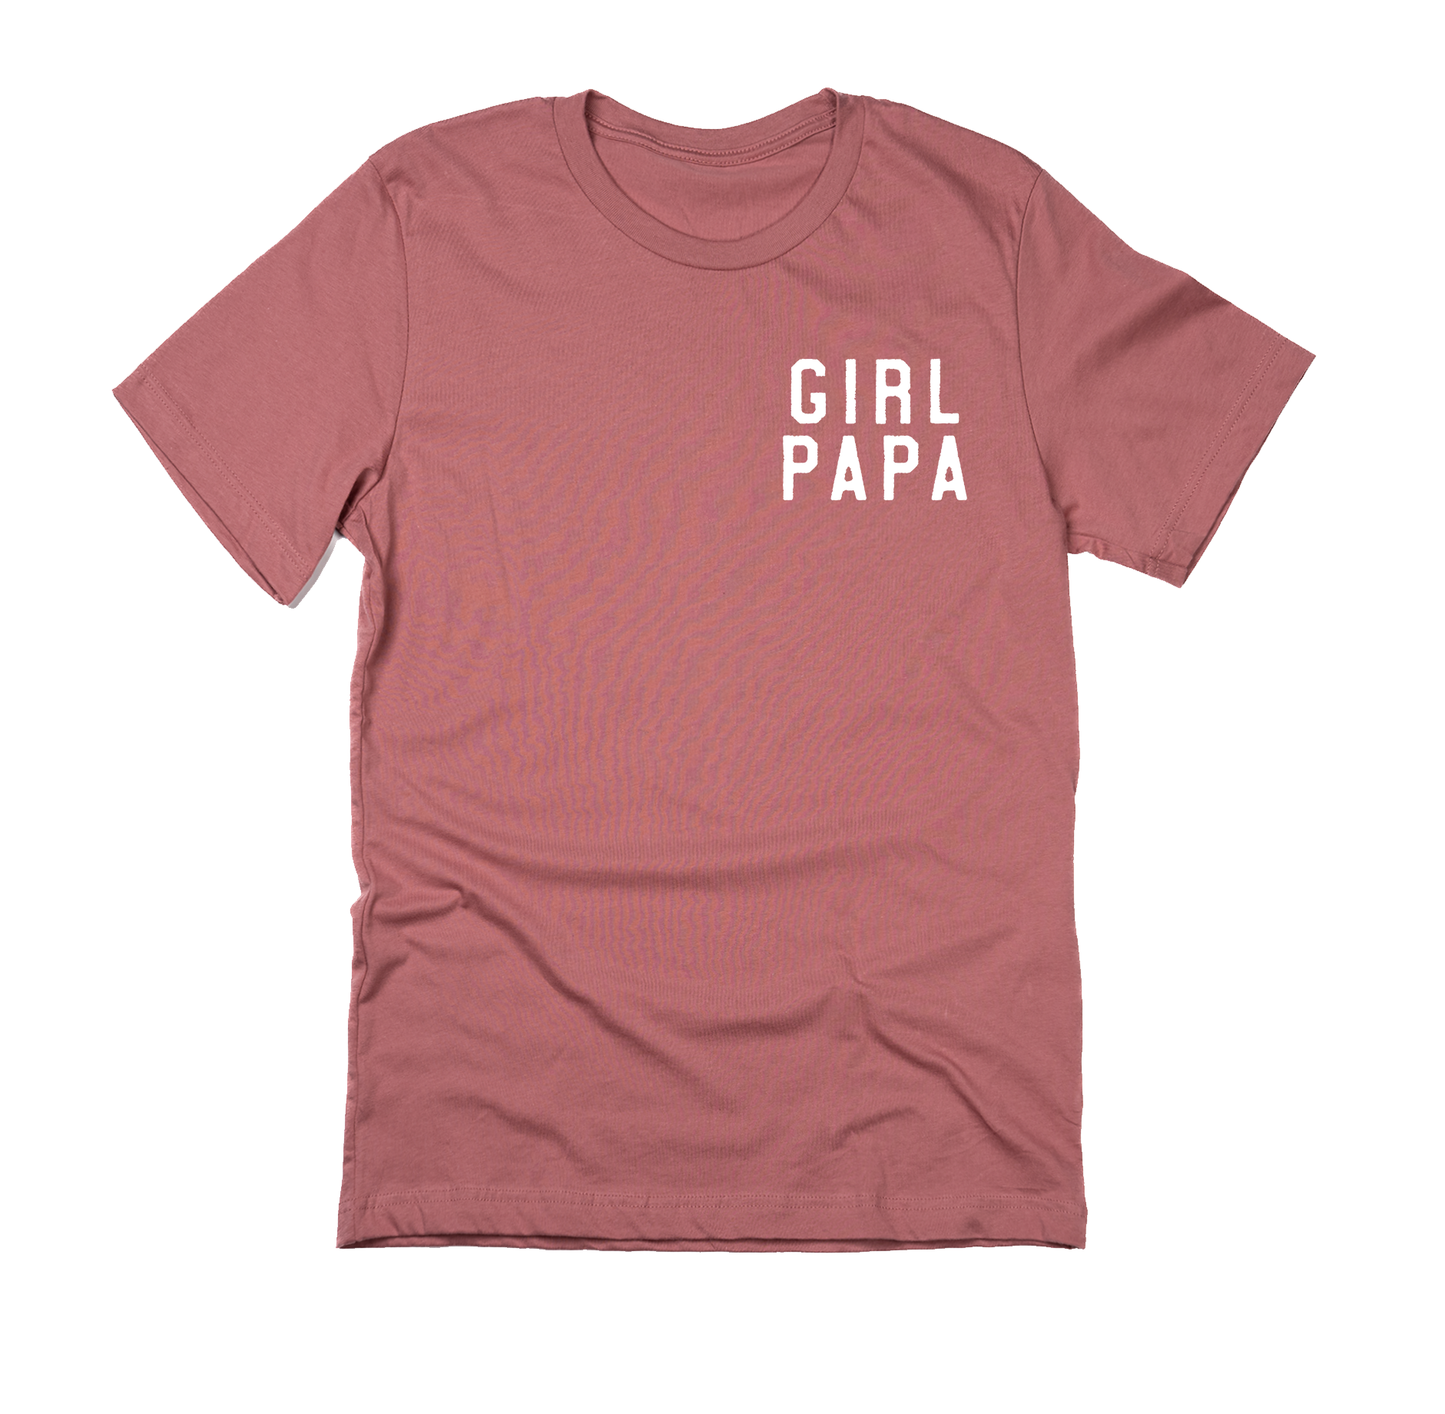 Girl Papa (Pocket, White) - Tee (Mauve)